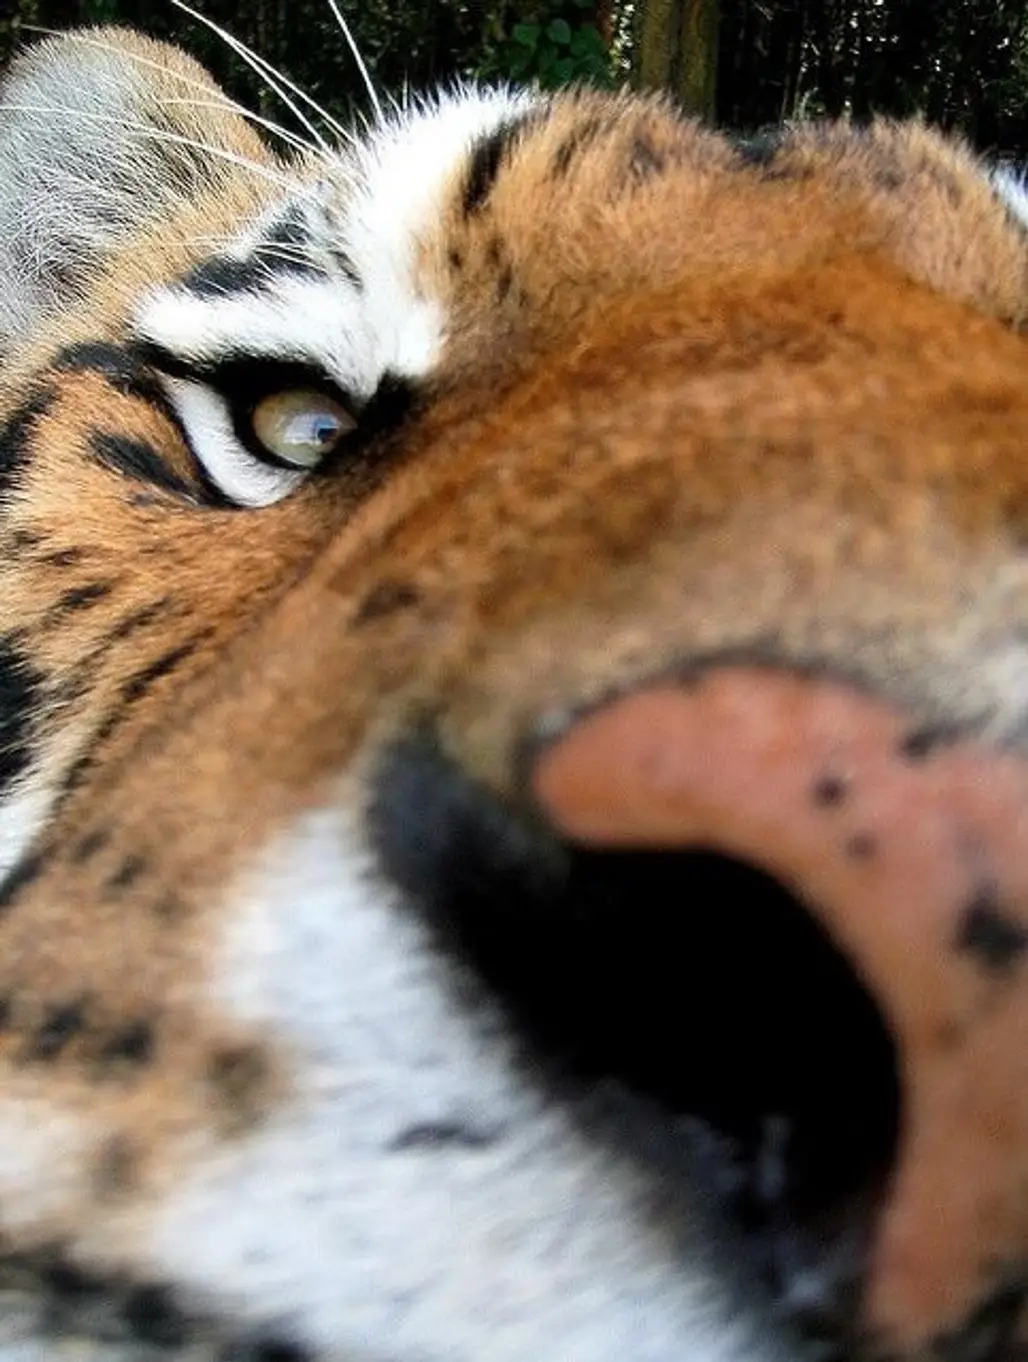 Tiger Selfie?